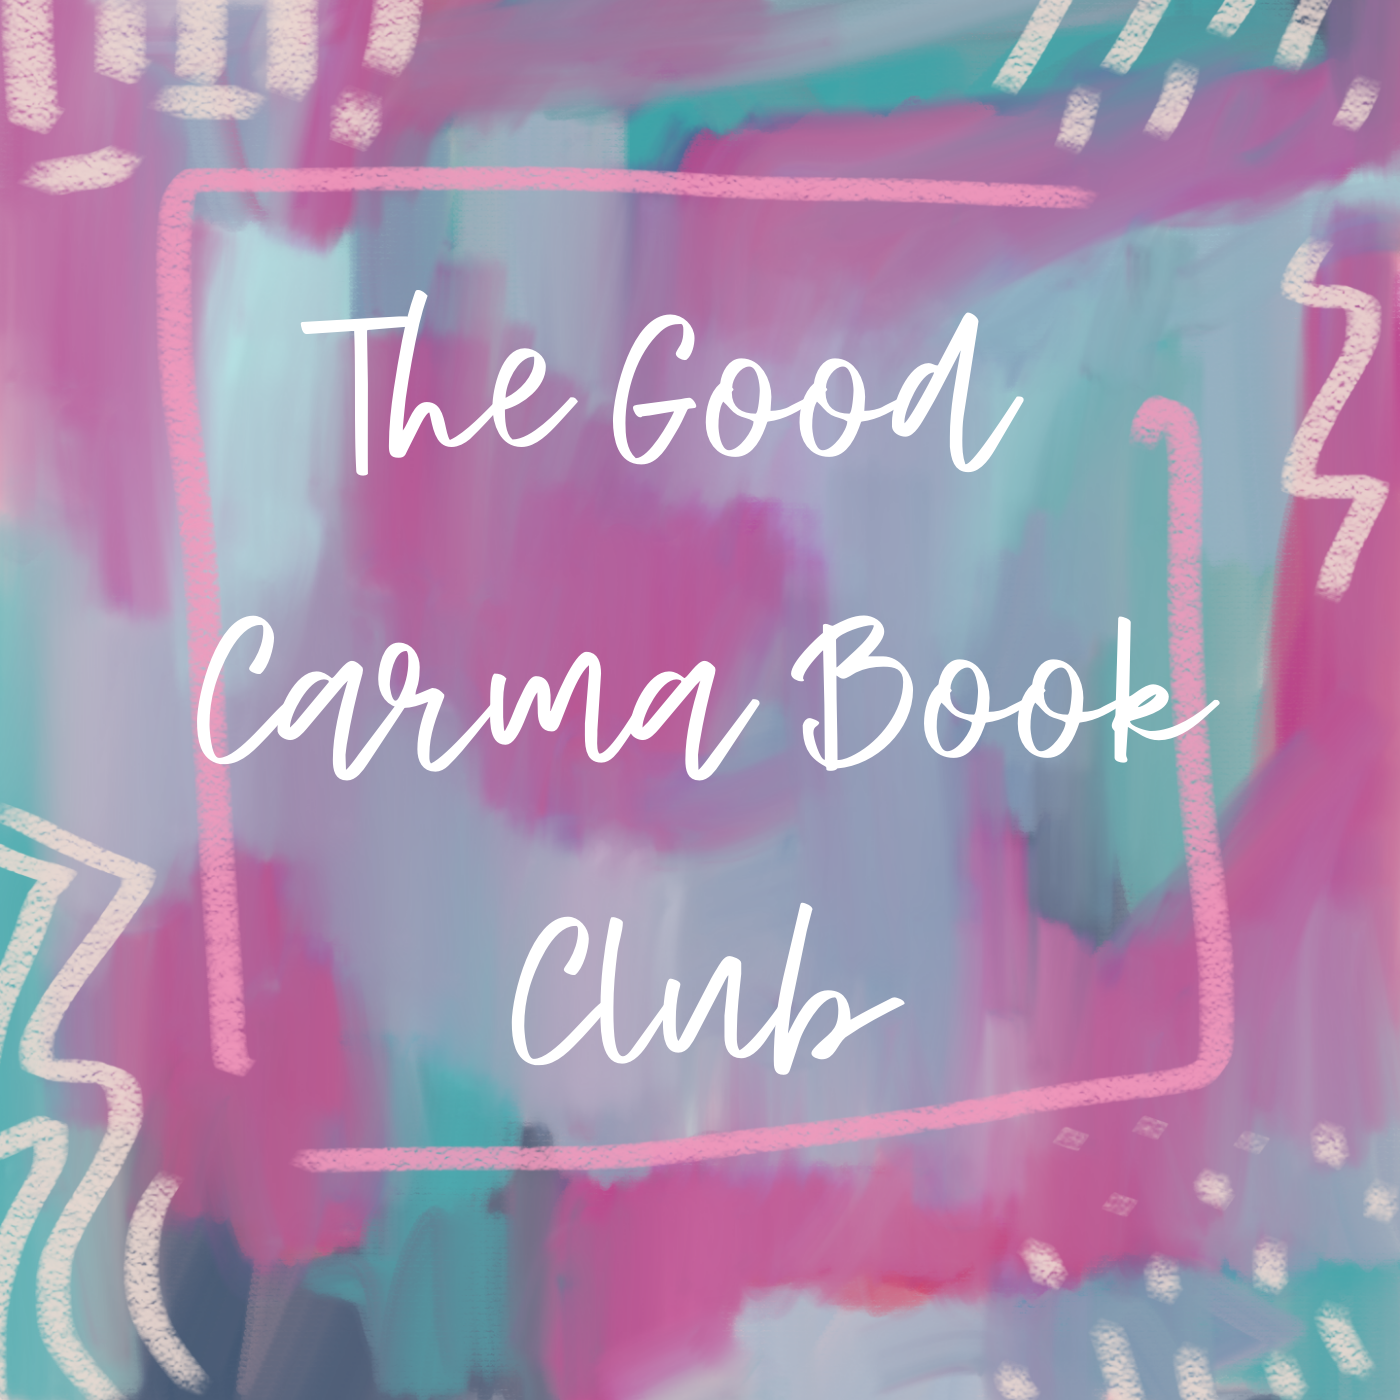 The Good Carma Book Club: July